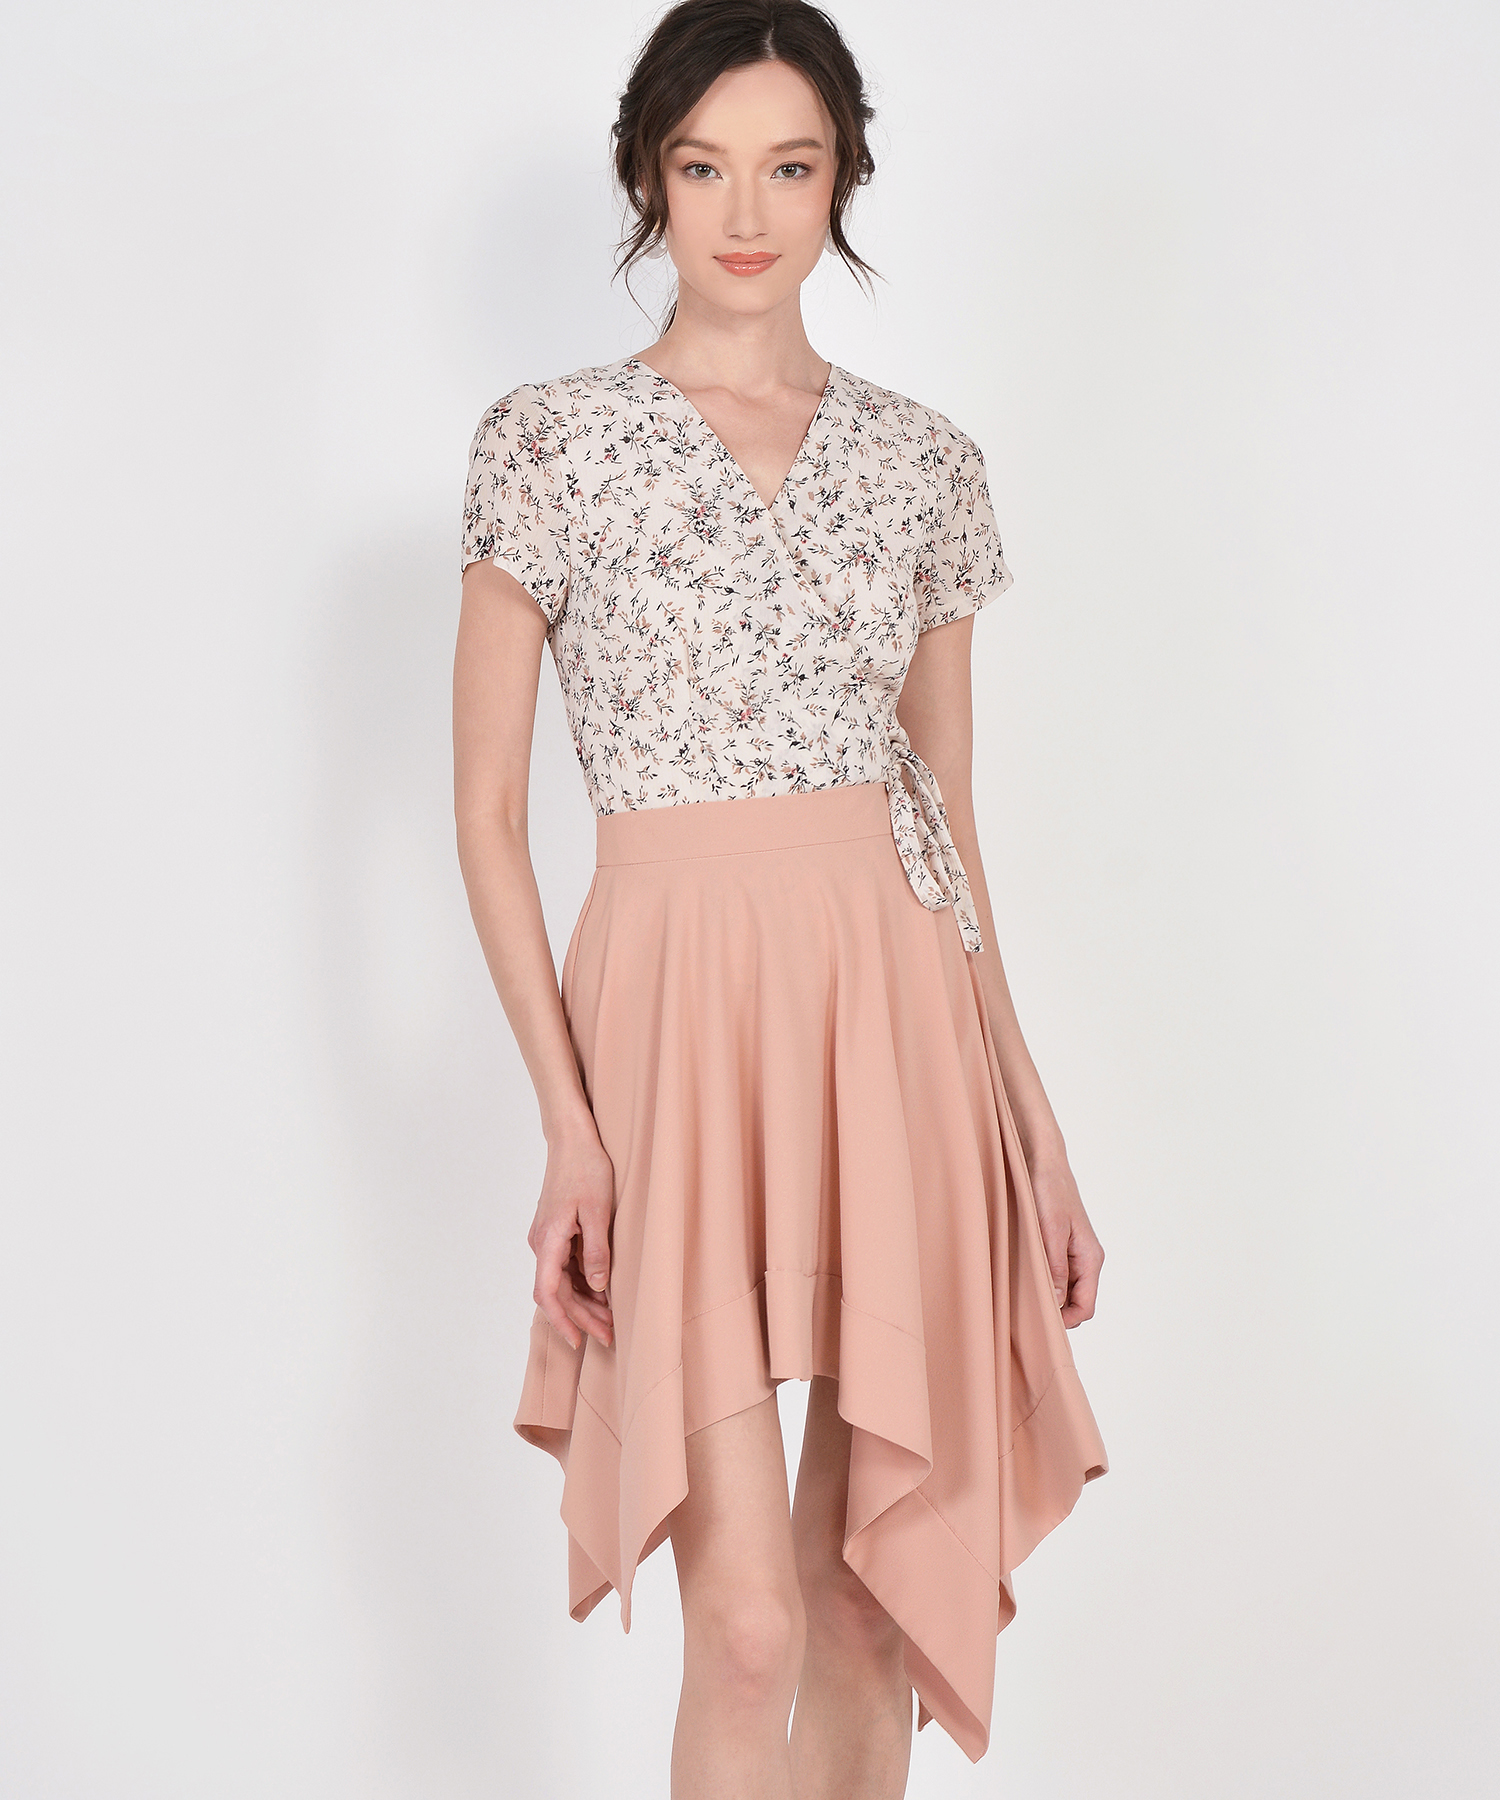 A girl wearing a peach asymmetrical skirt